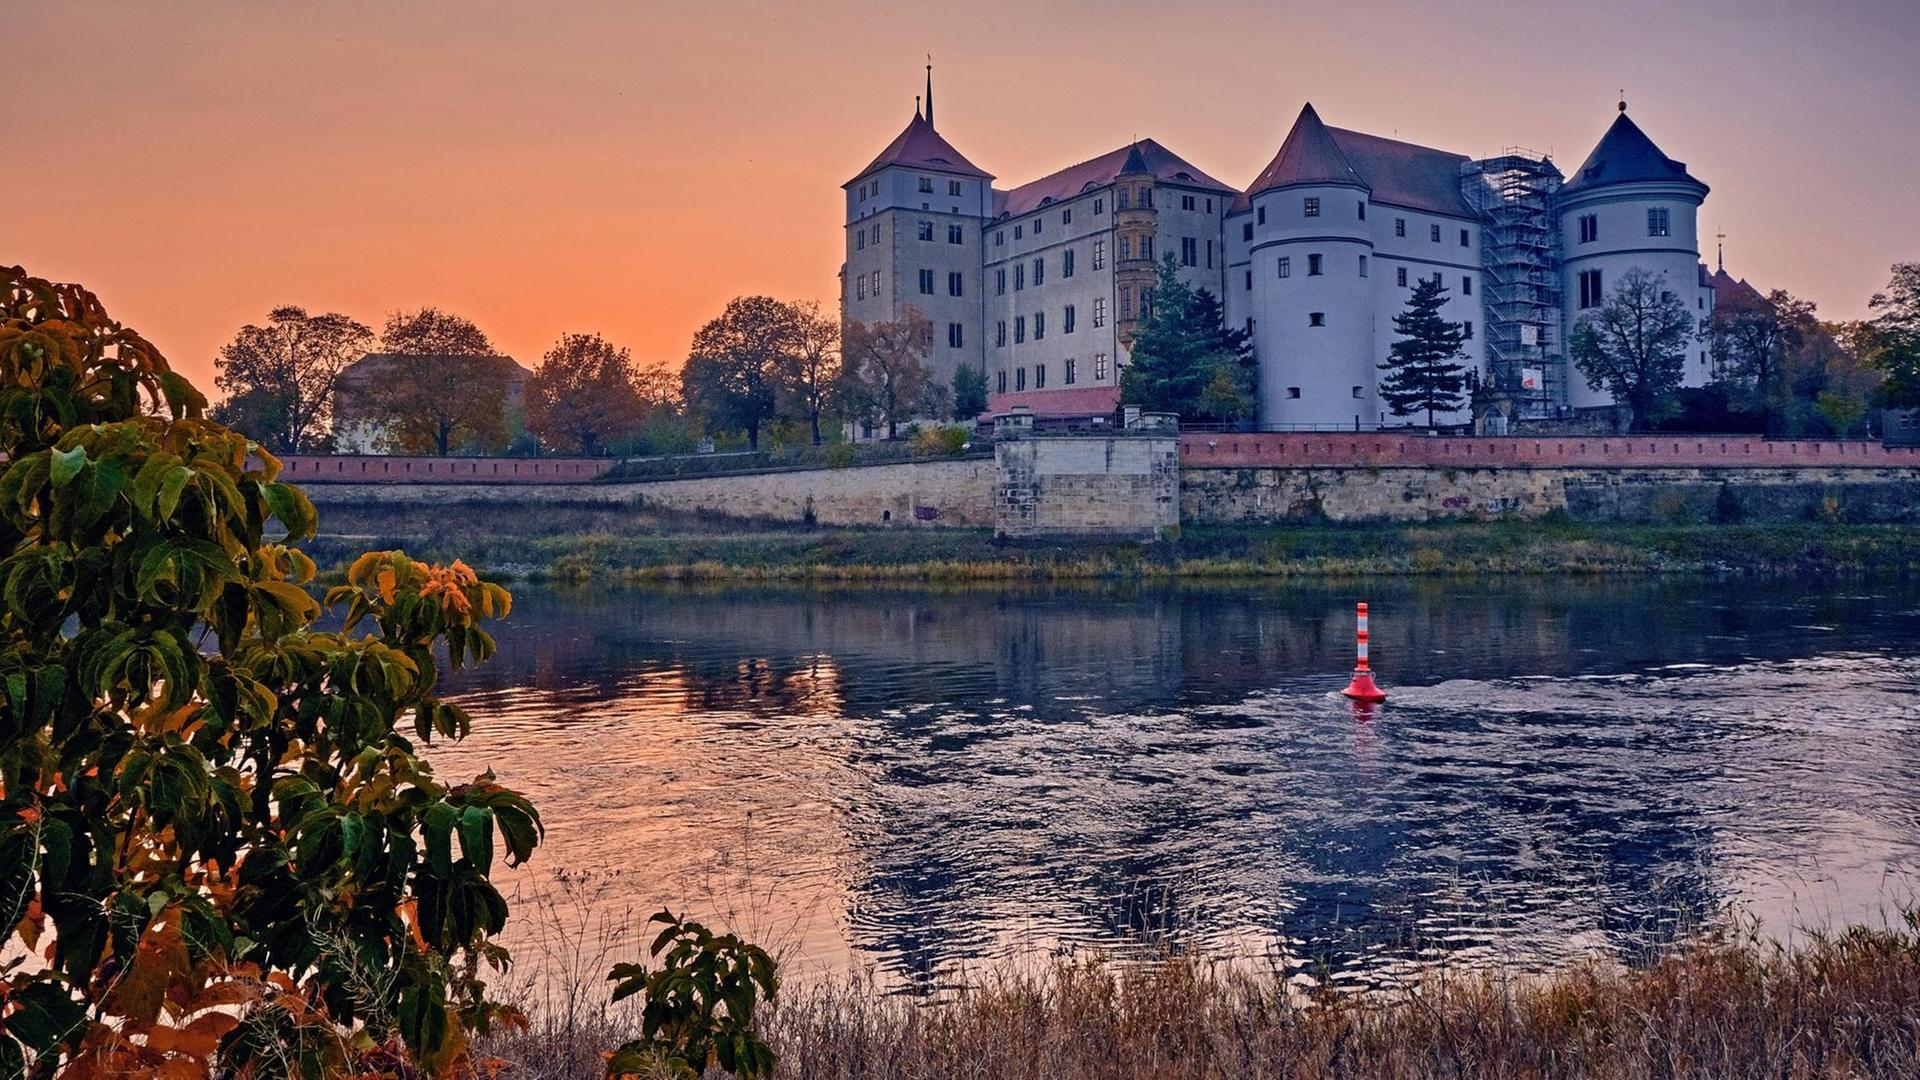 Das Schloss Hartenfels im Sonnenuntergang am Ufer der Elbe in Torgau.